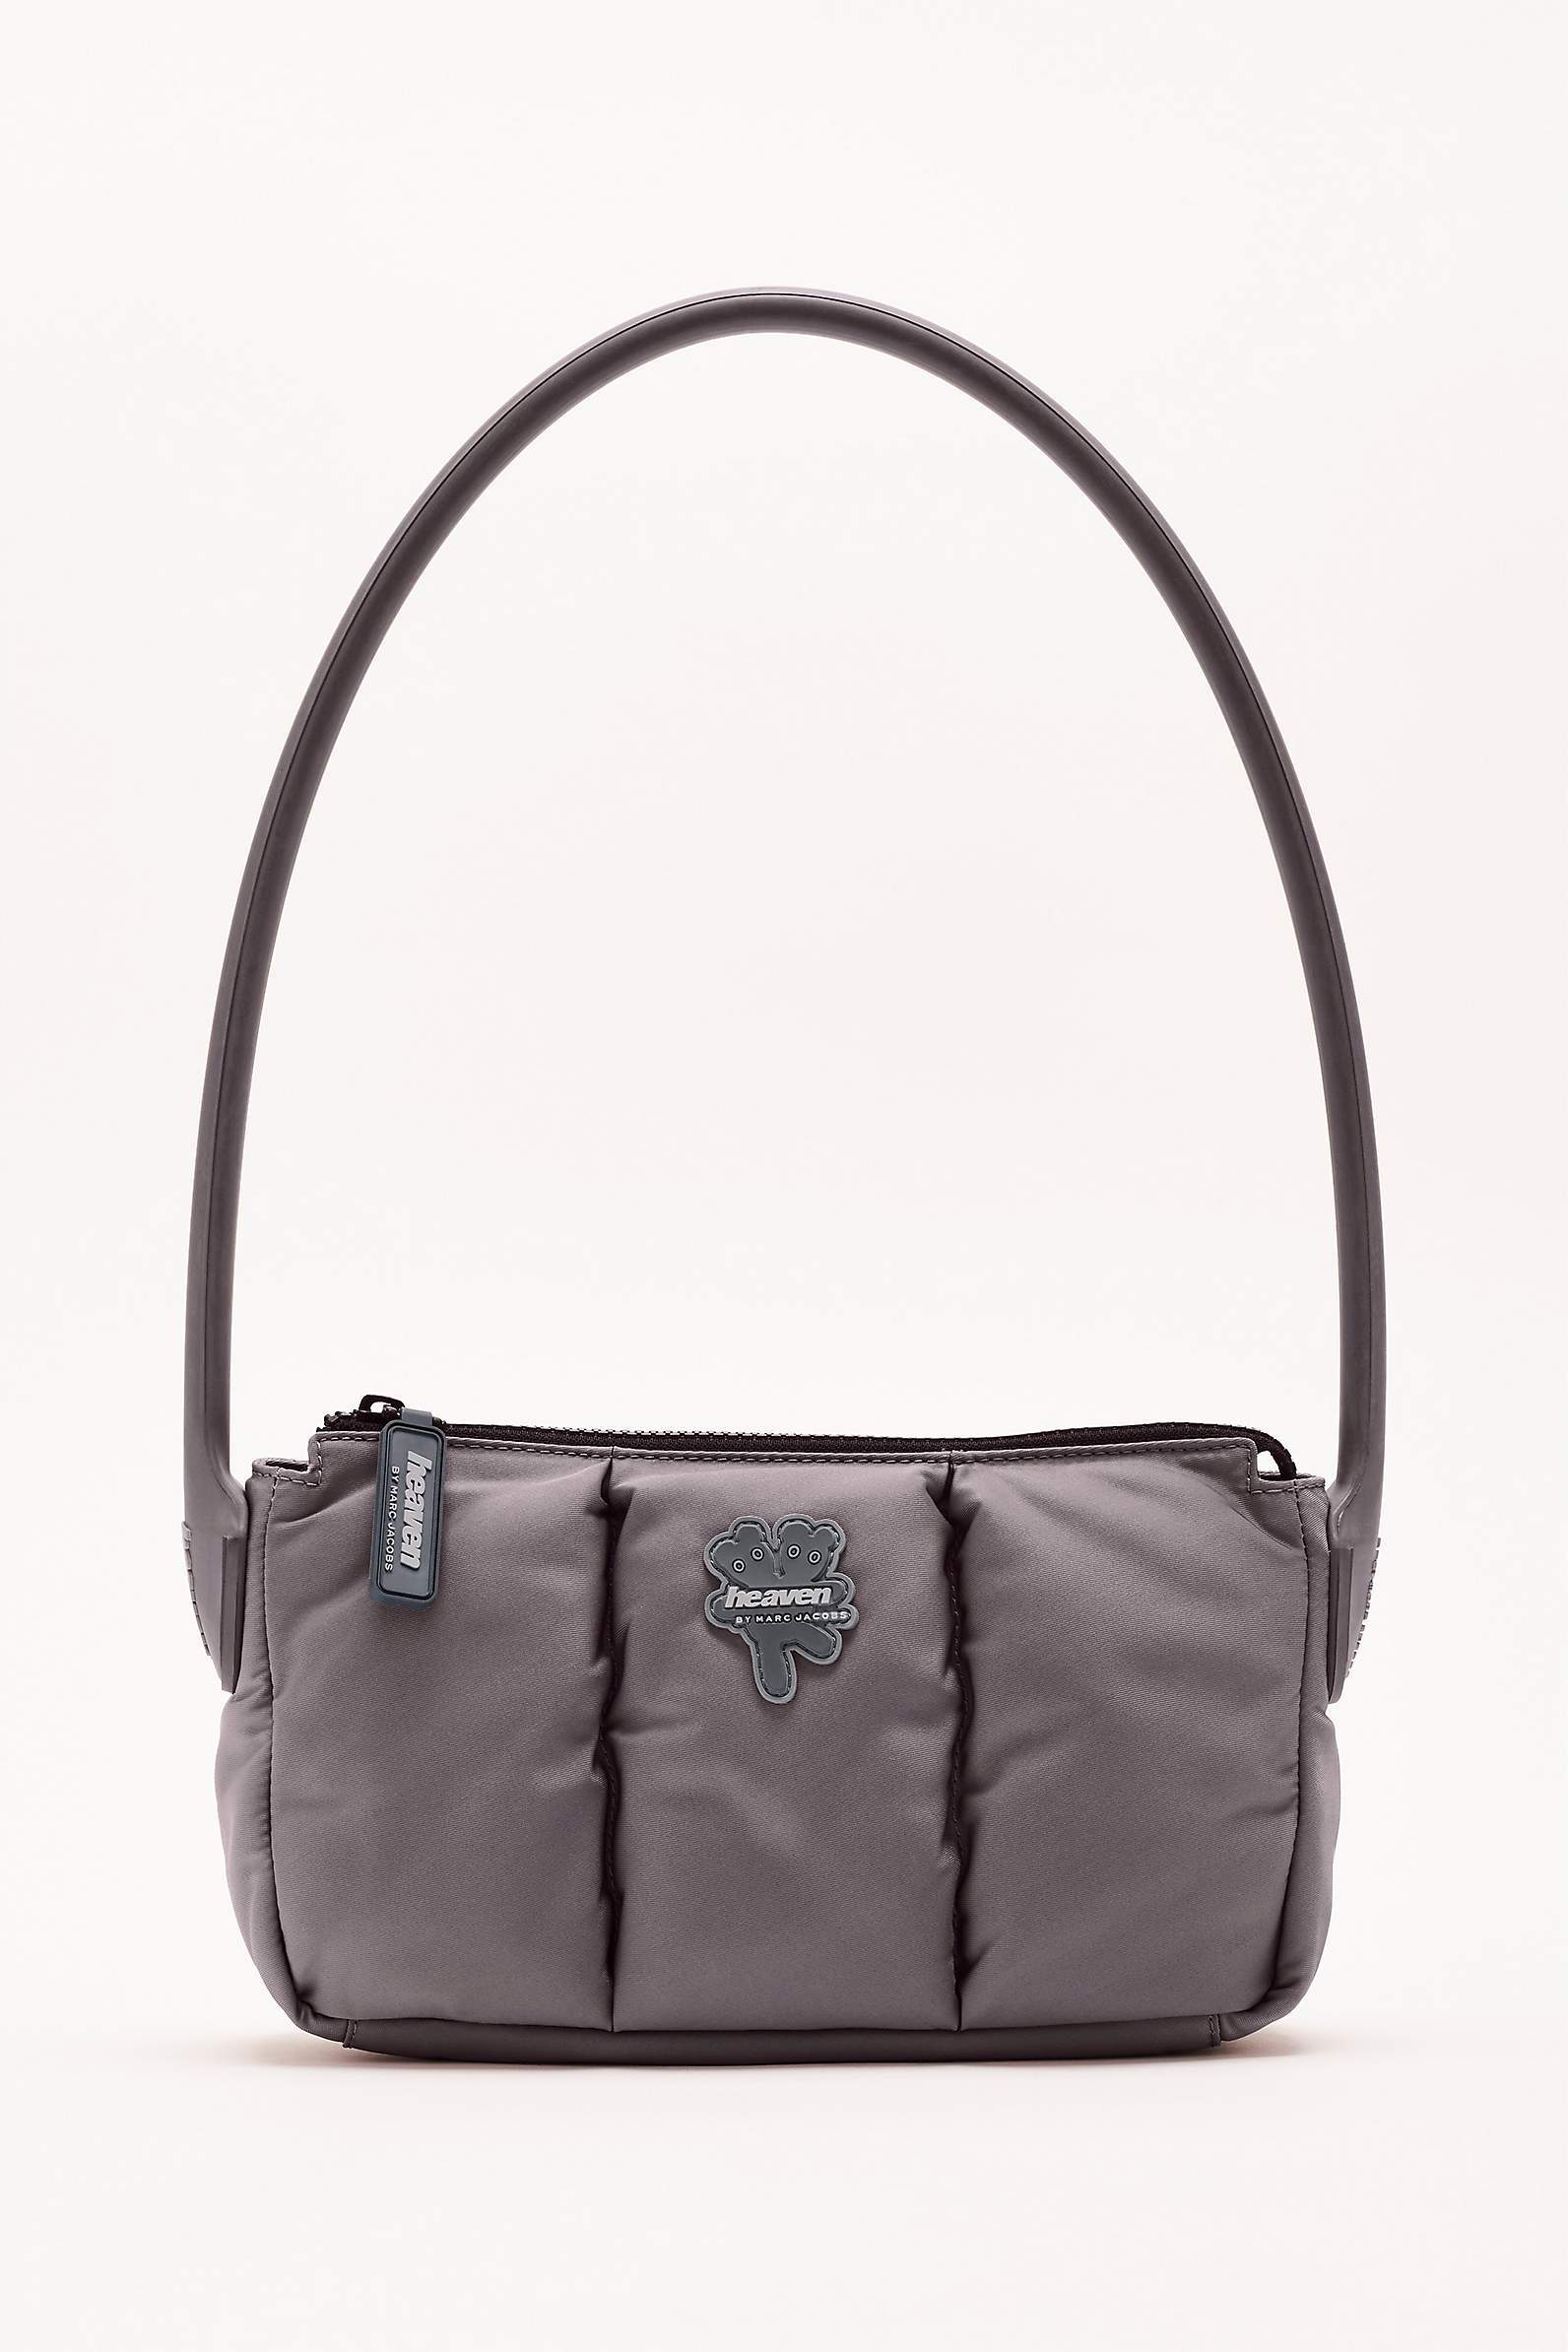 Black Snapshot Crossbody by Marc Jacobs Handbags for $44